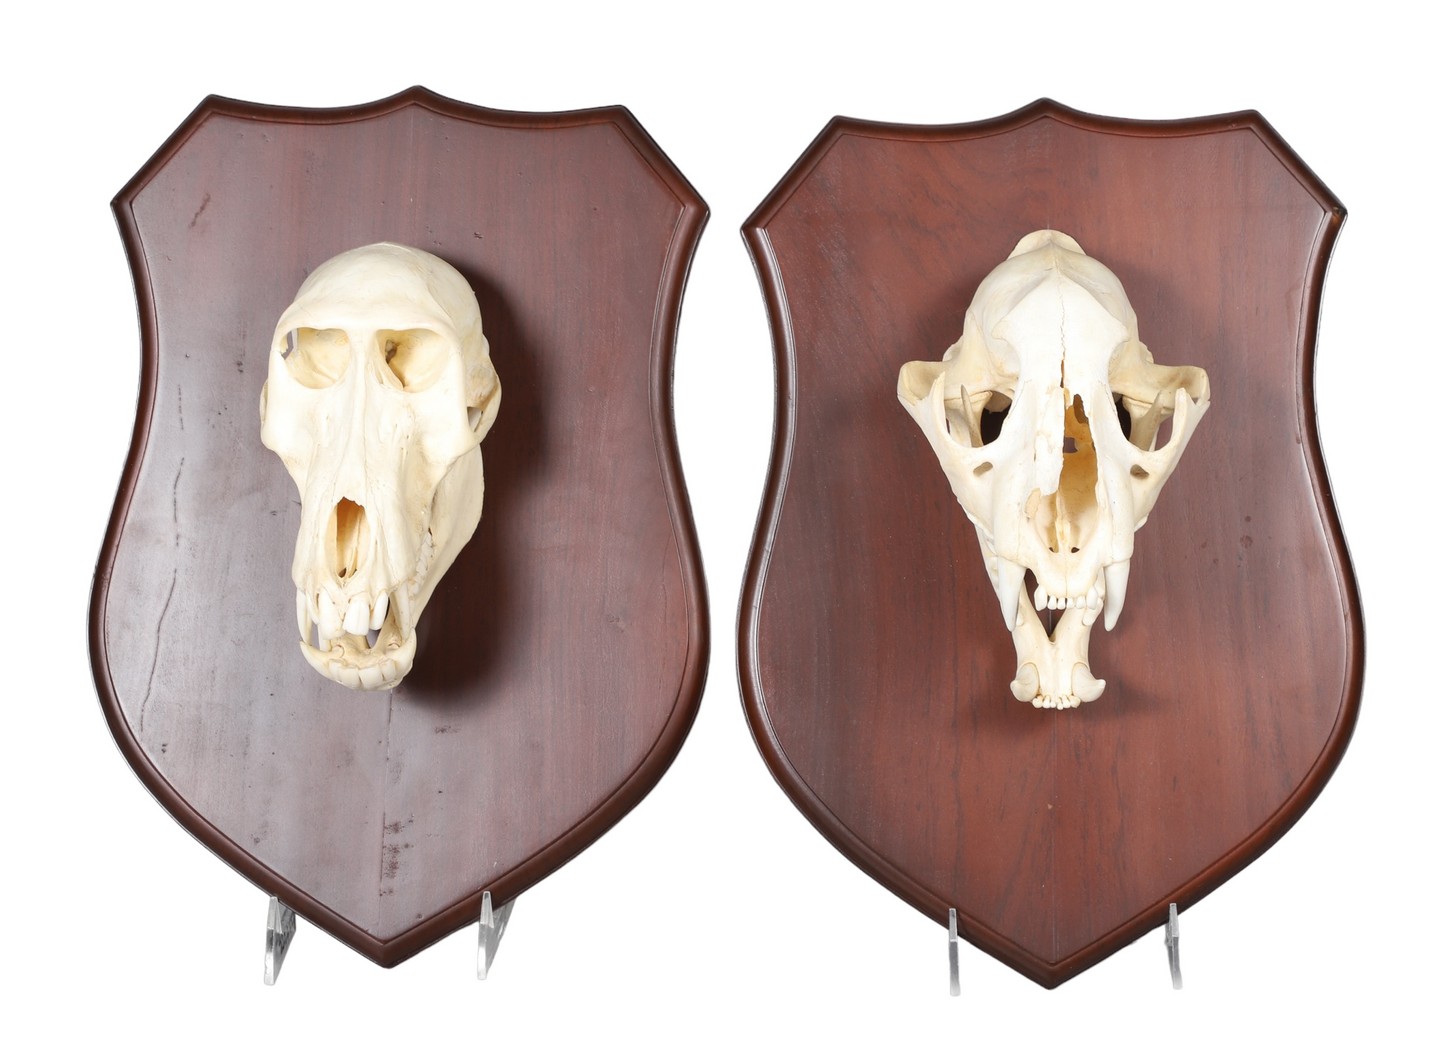  2 African monkey skull mounts  2e06cc